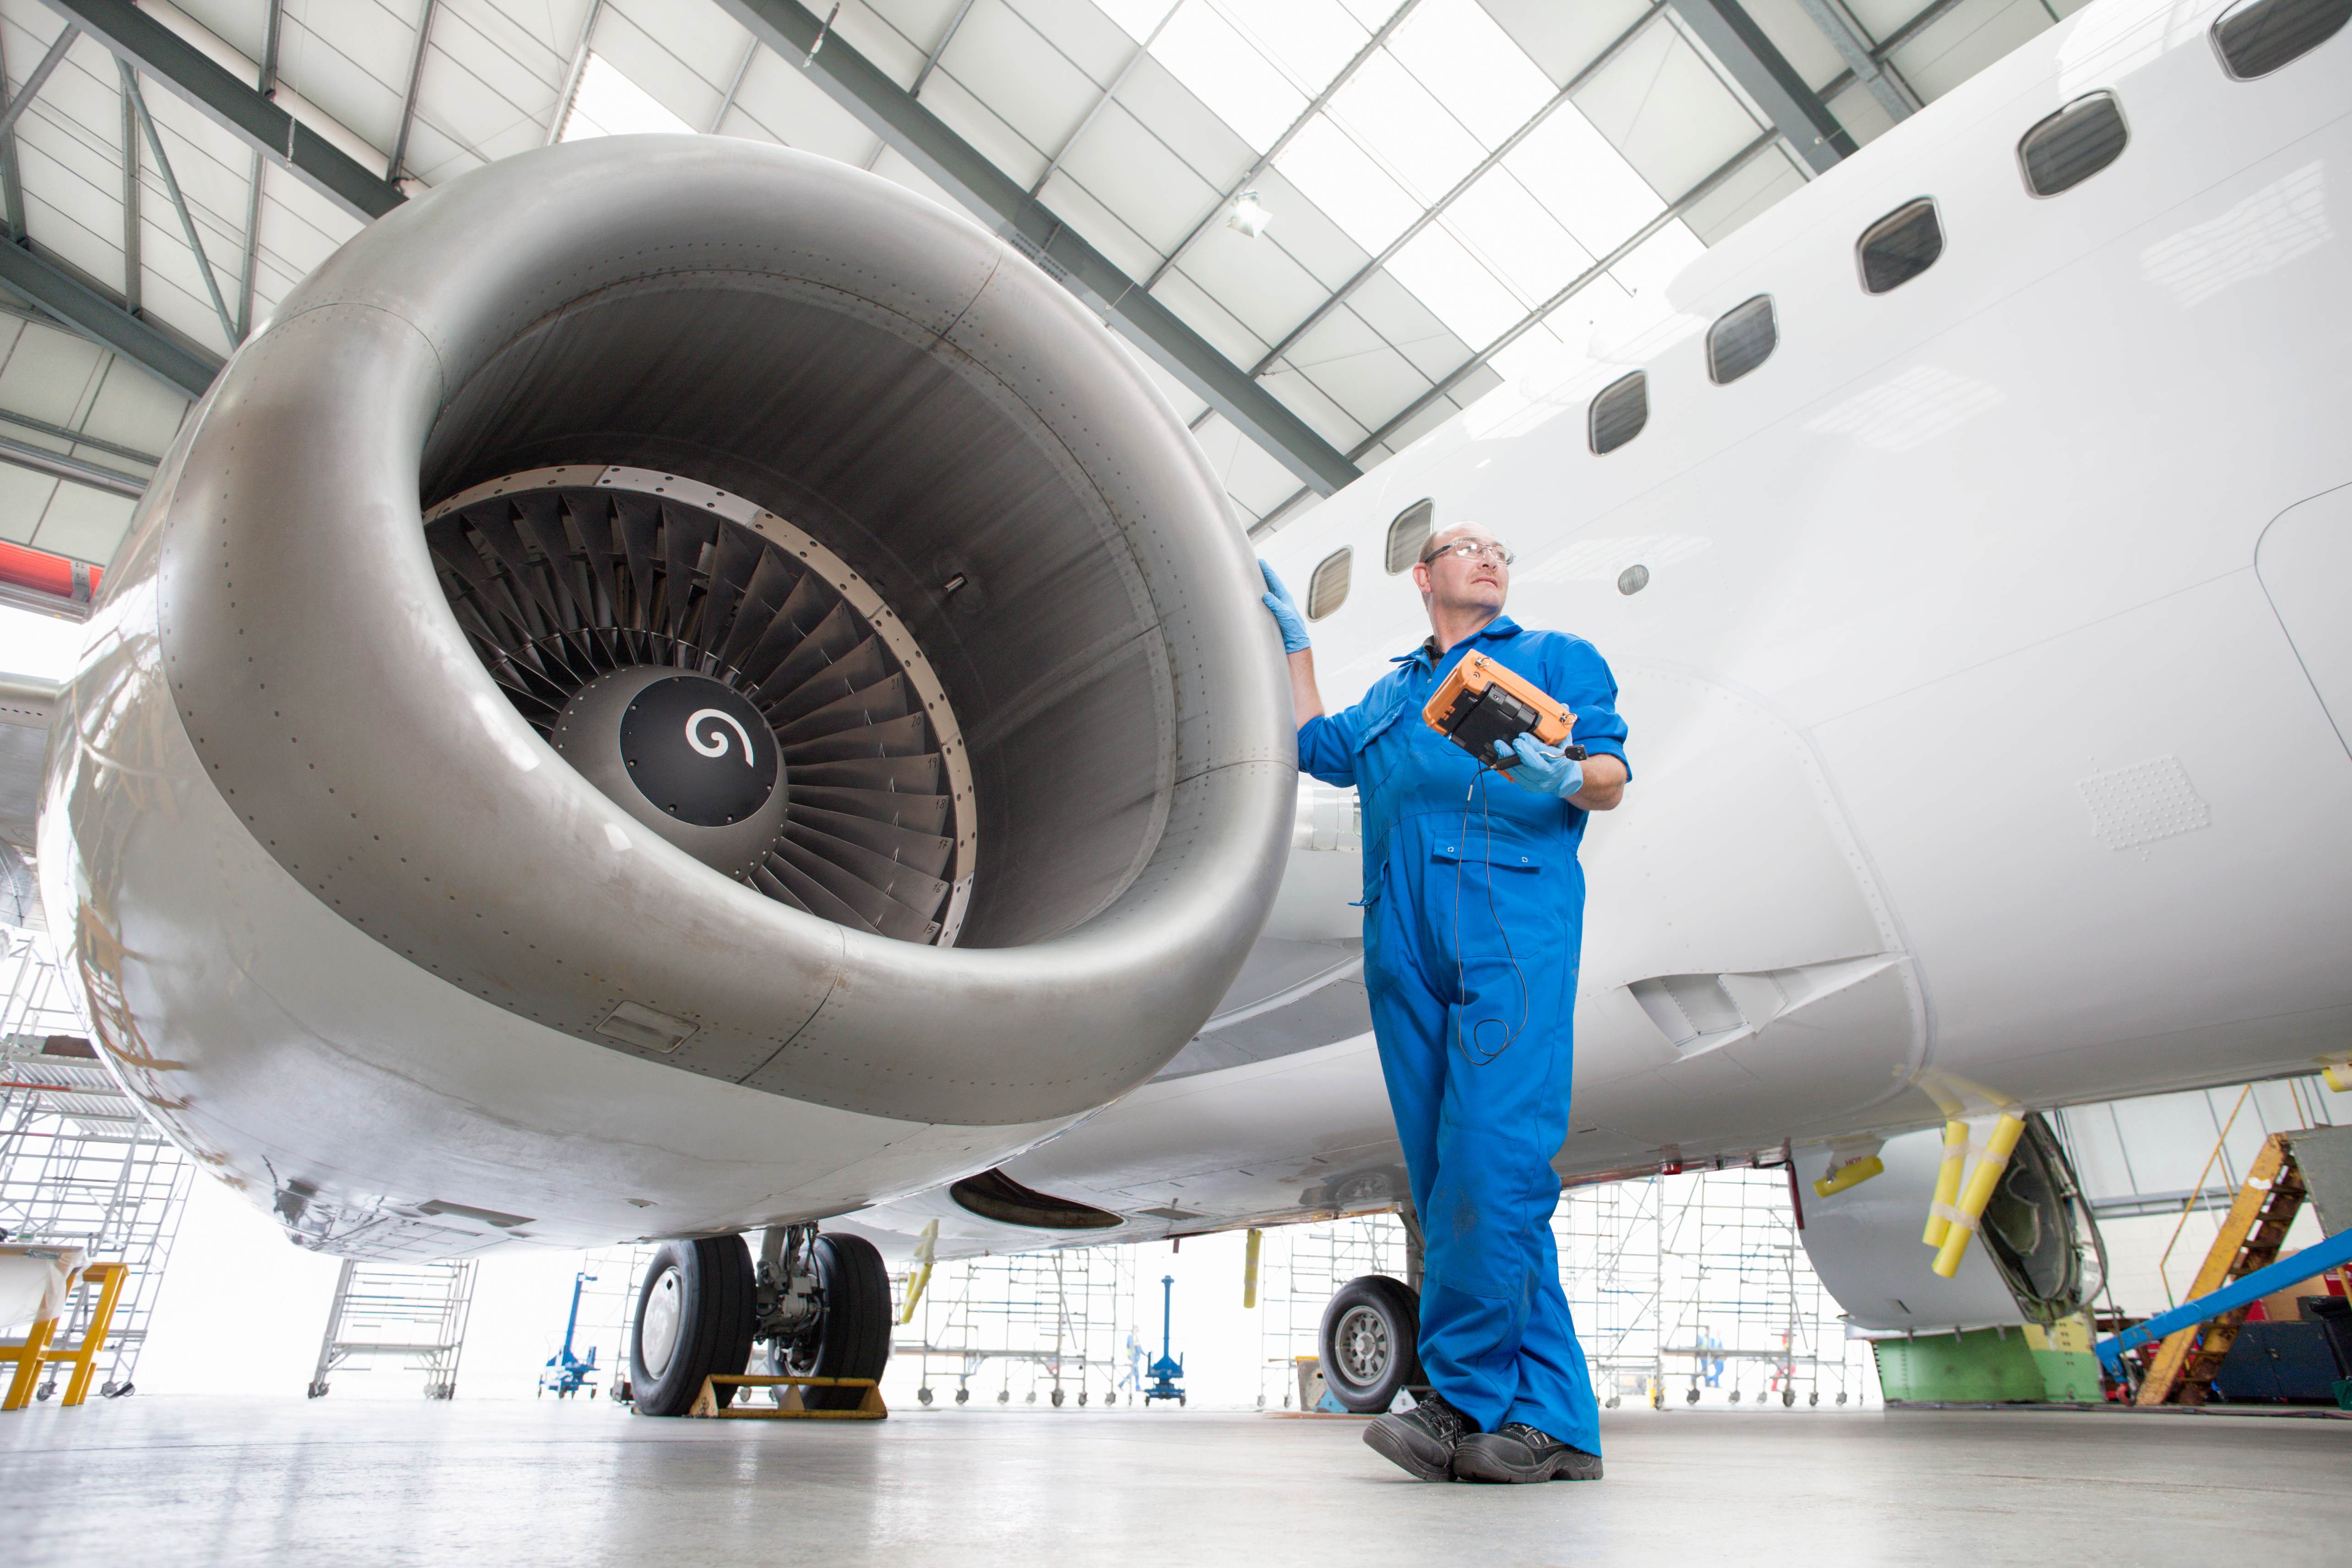 Shutterstock image, aerospace, engineer, aviation, global aerospace markets